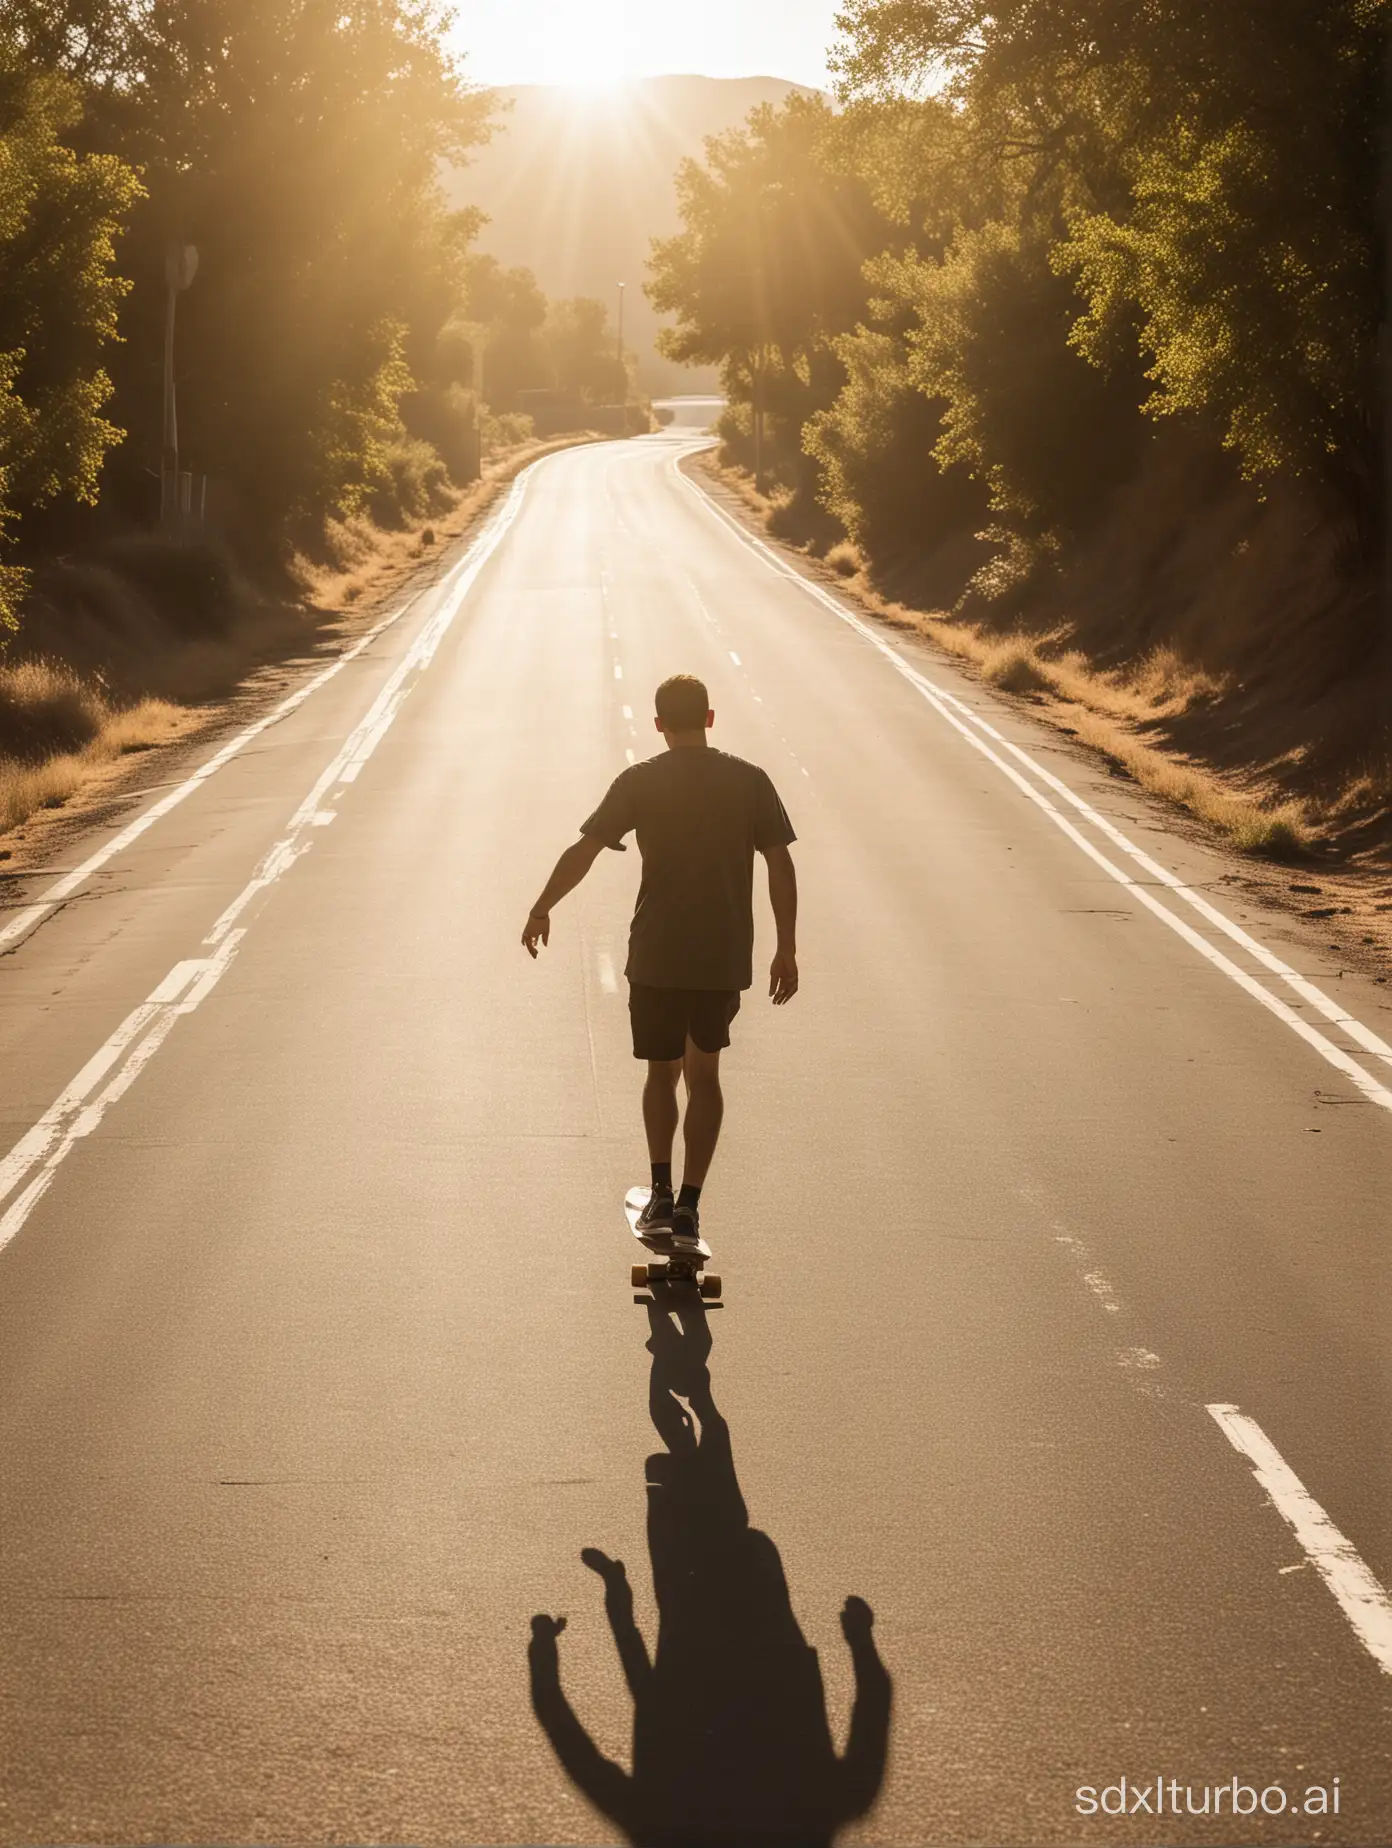 Skateboarder-Navigating-Winding-Road-under-Suns-Intense-Glare